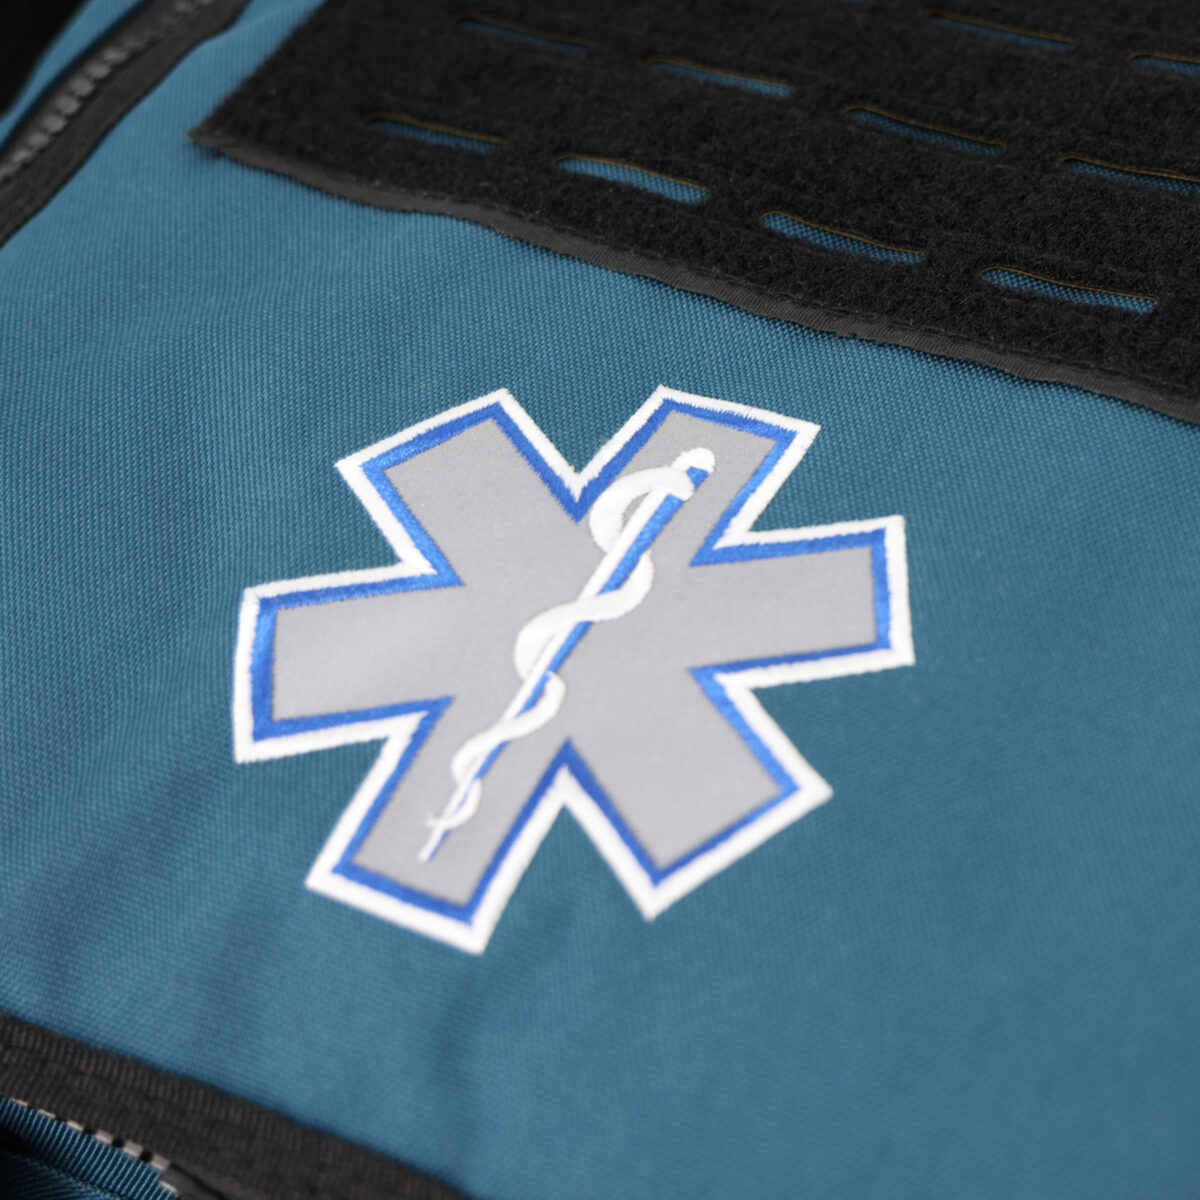 lightning x mb35 trauma bag with embroidered star of life logo emblum